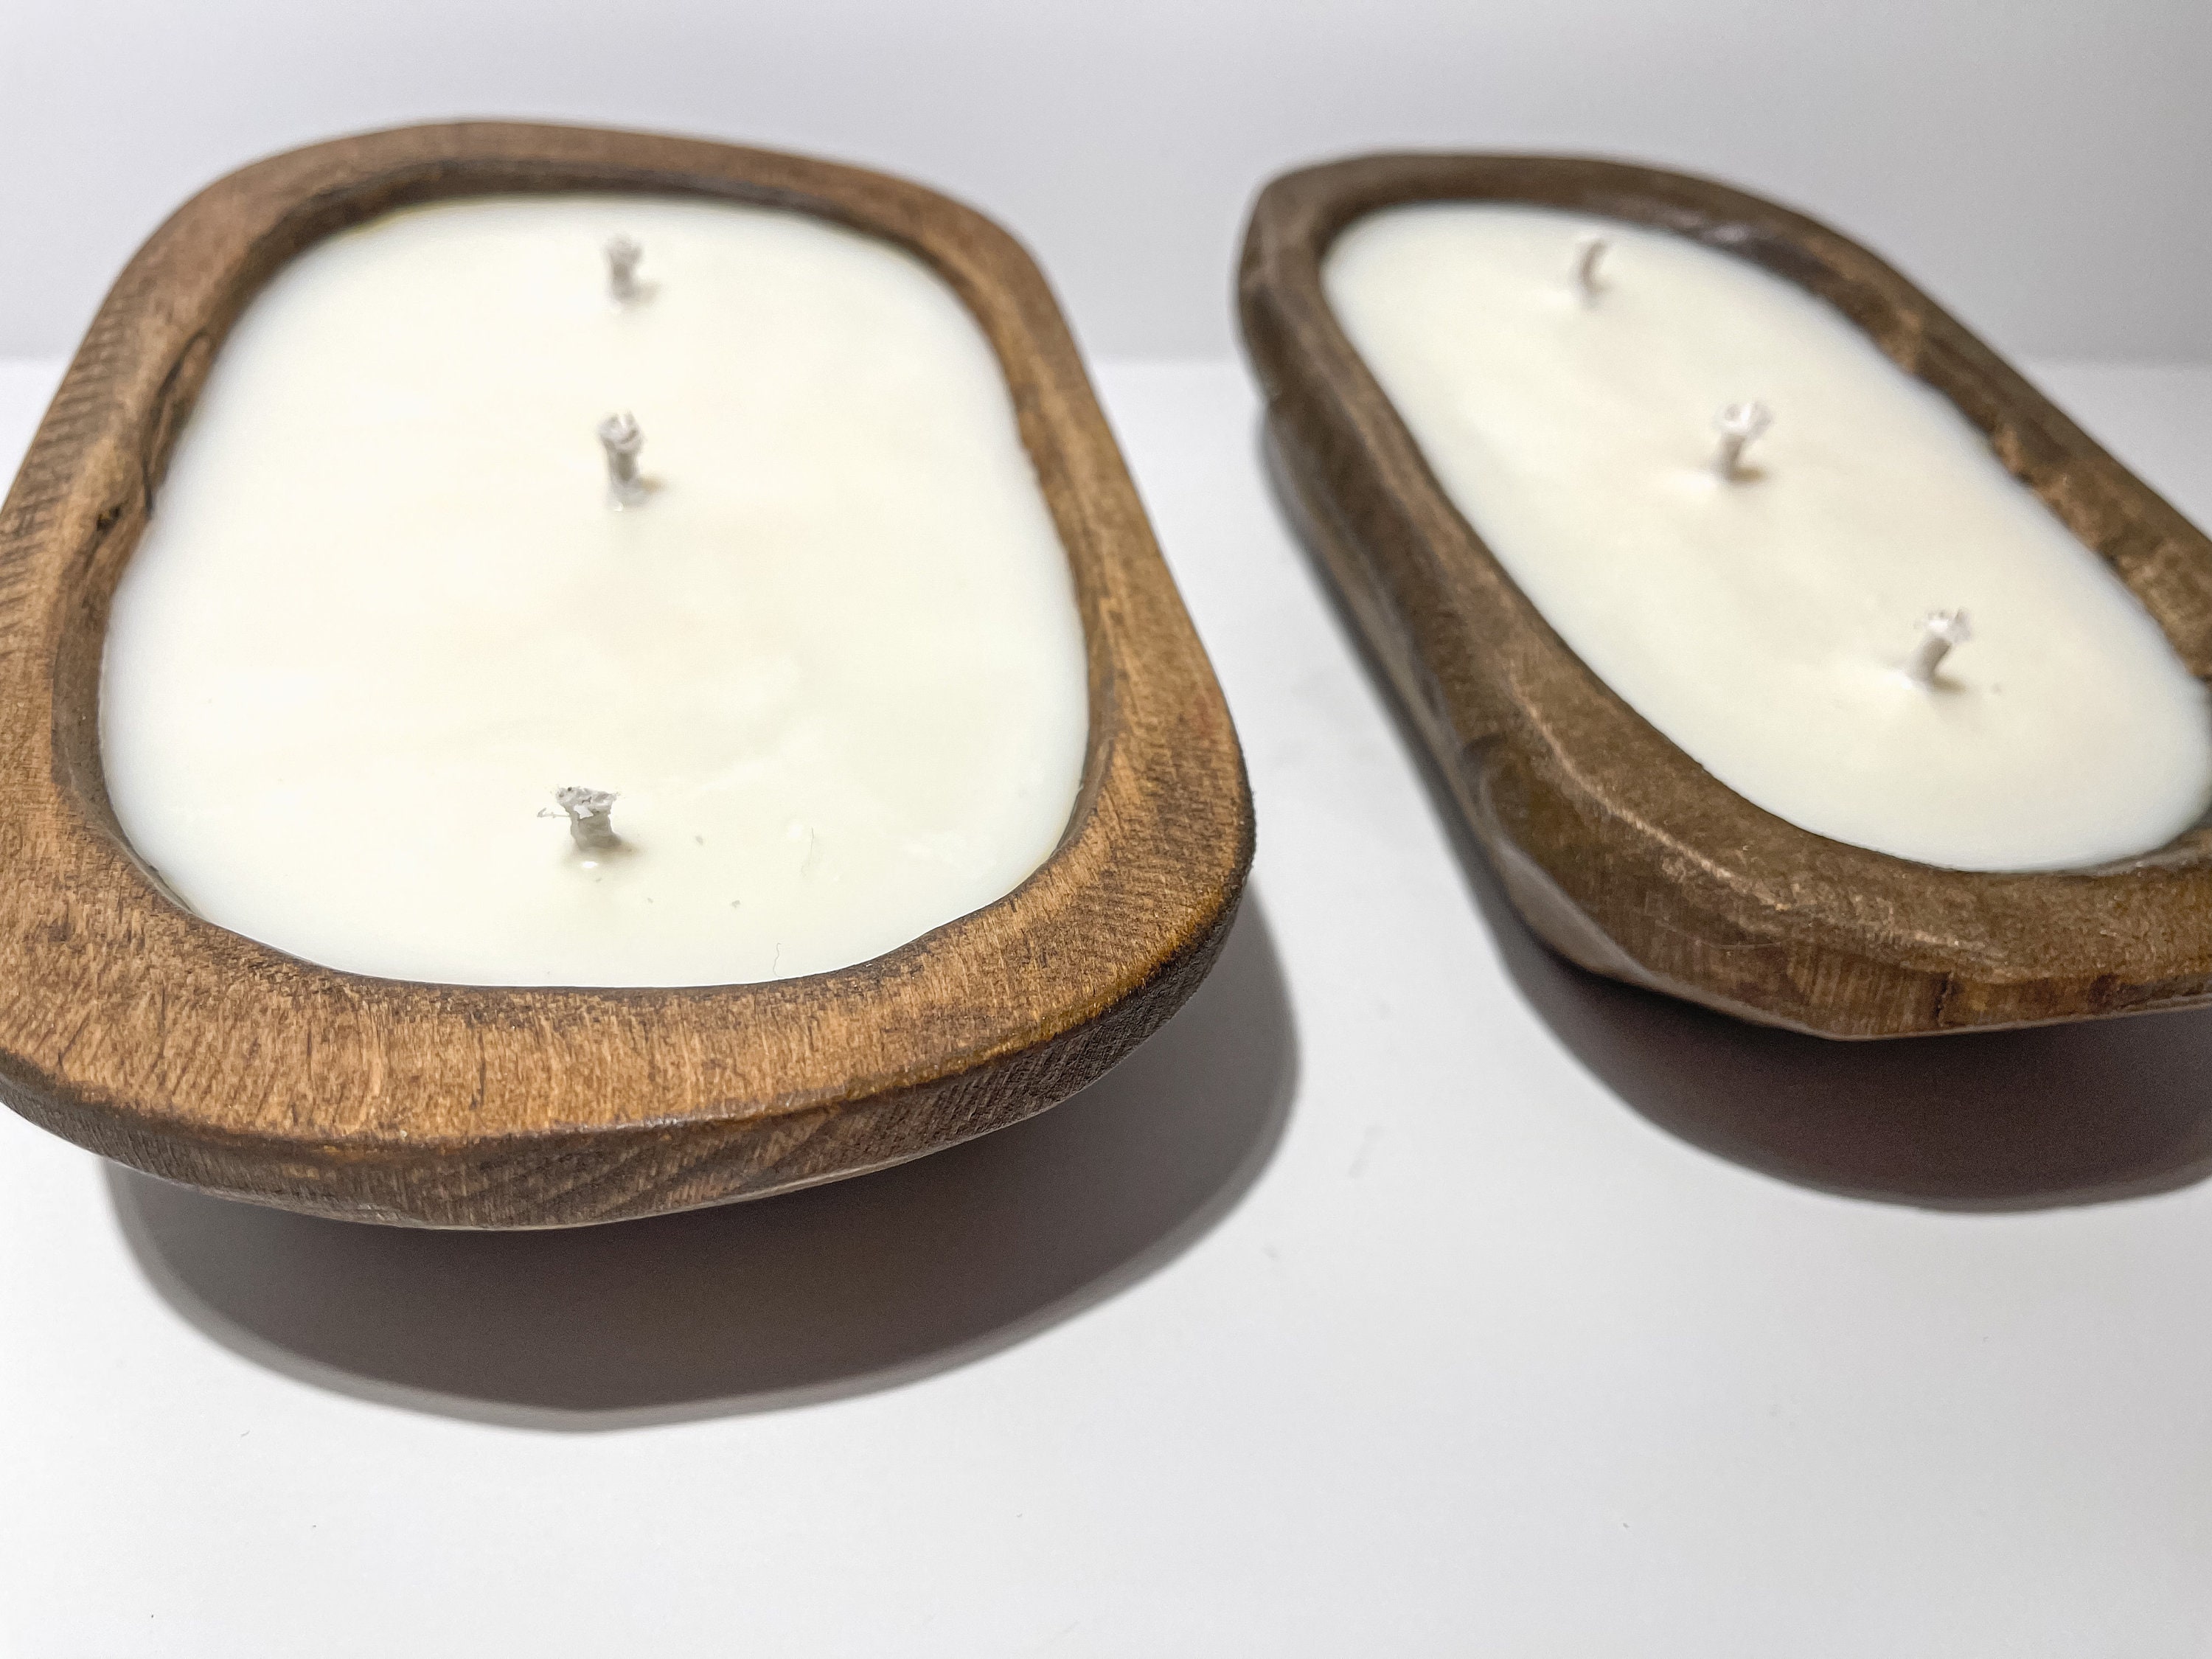 Volcano Freshie – Linda's Candles